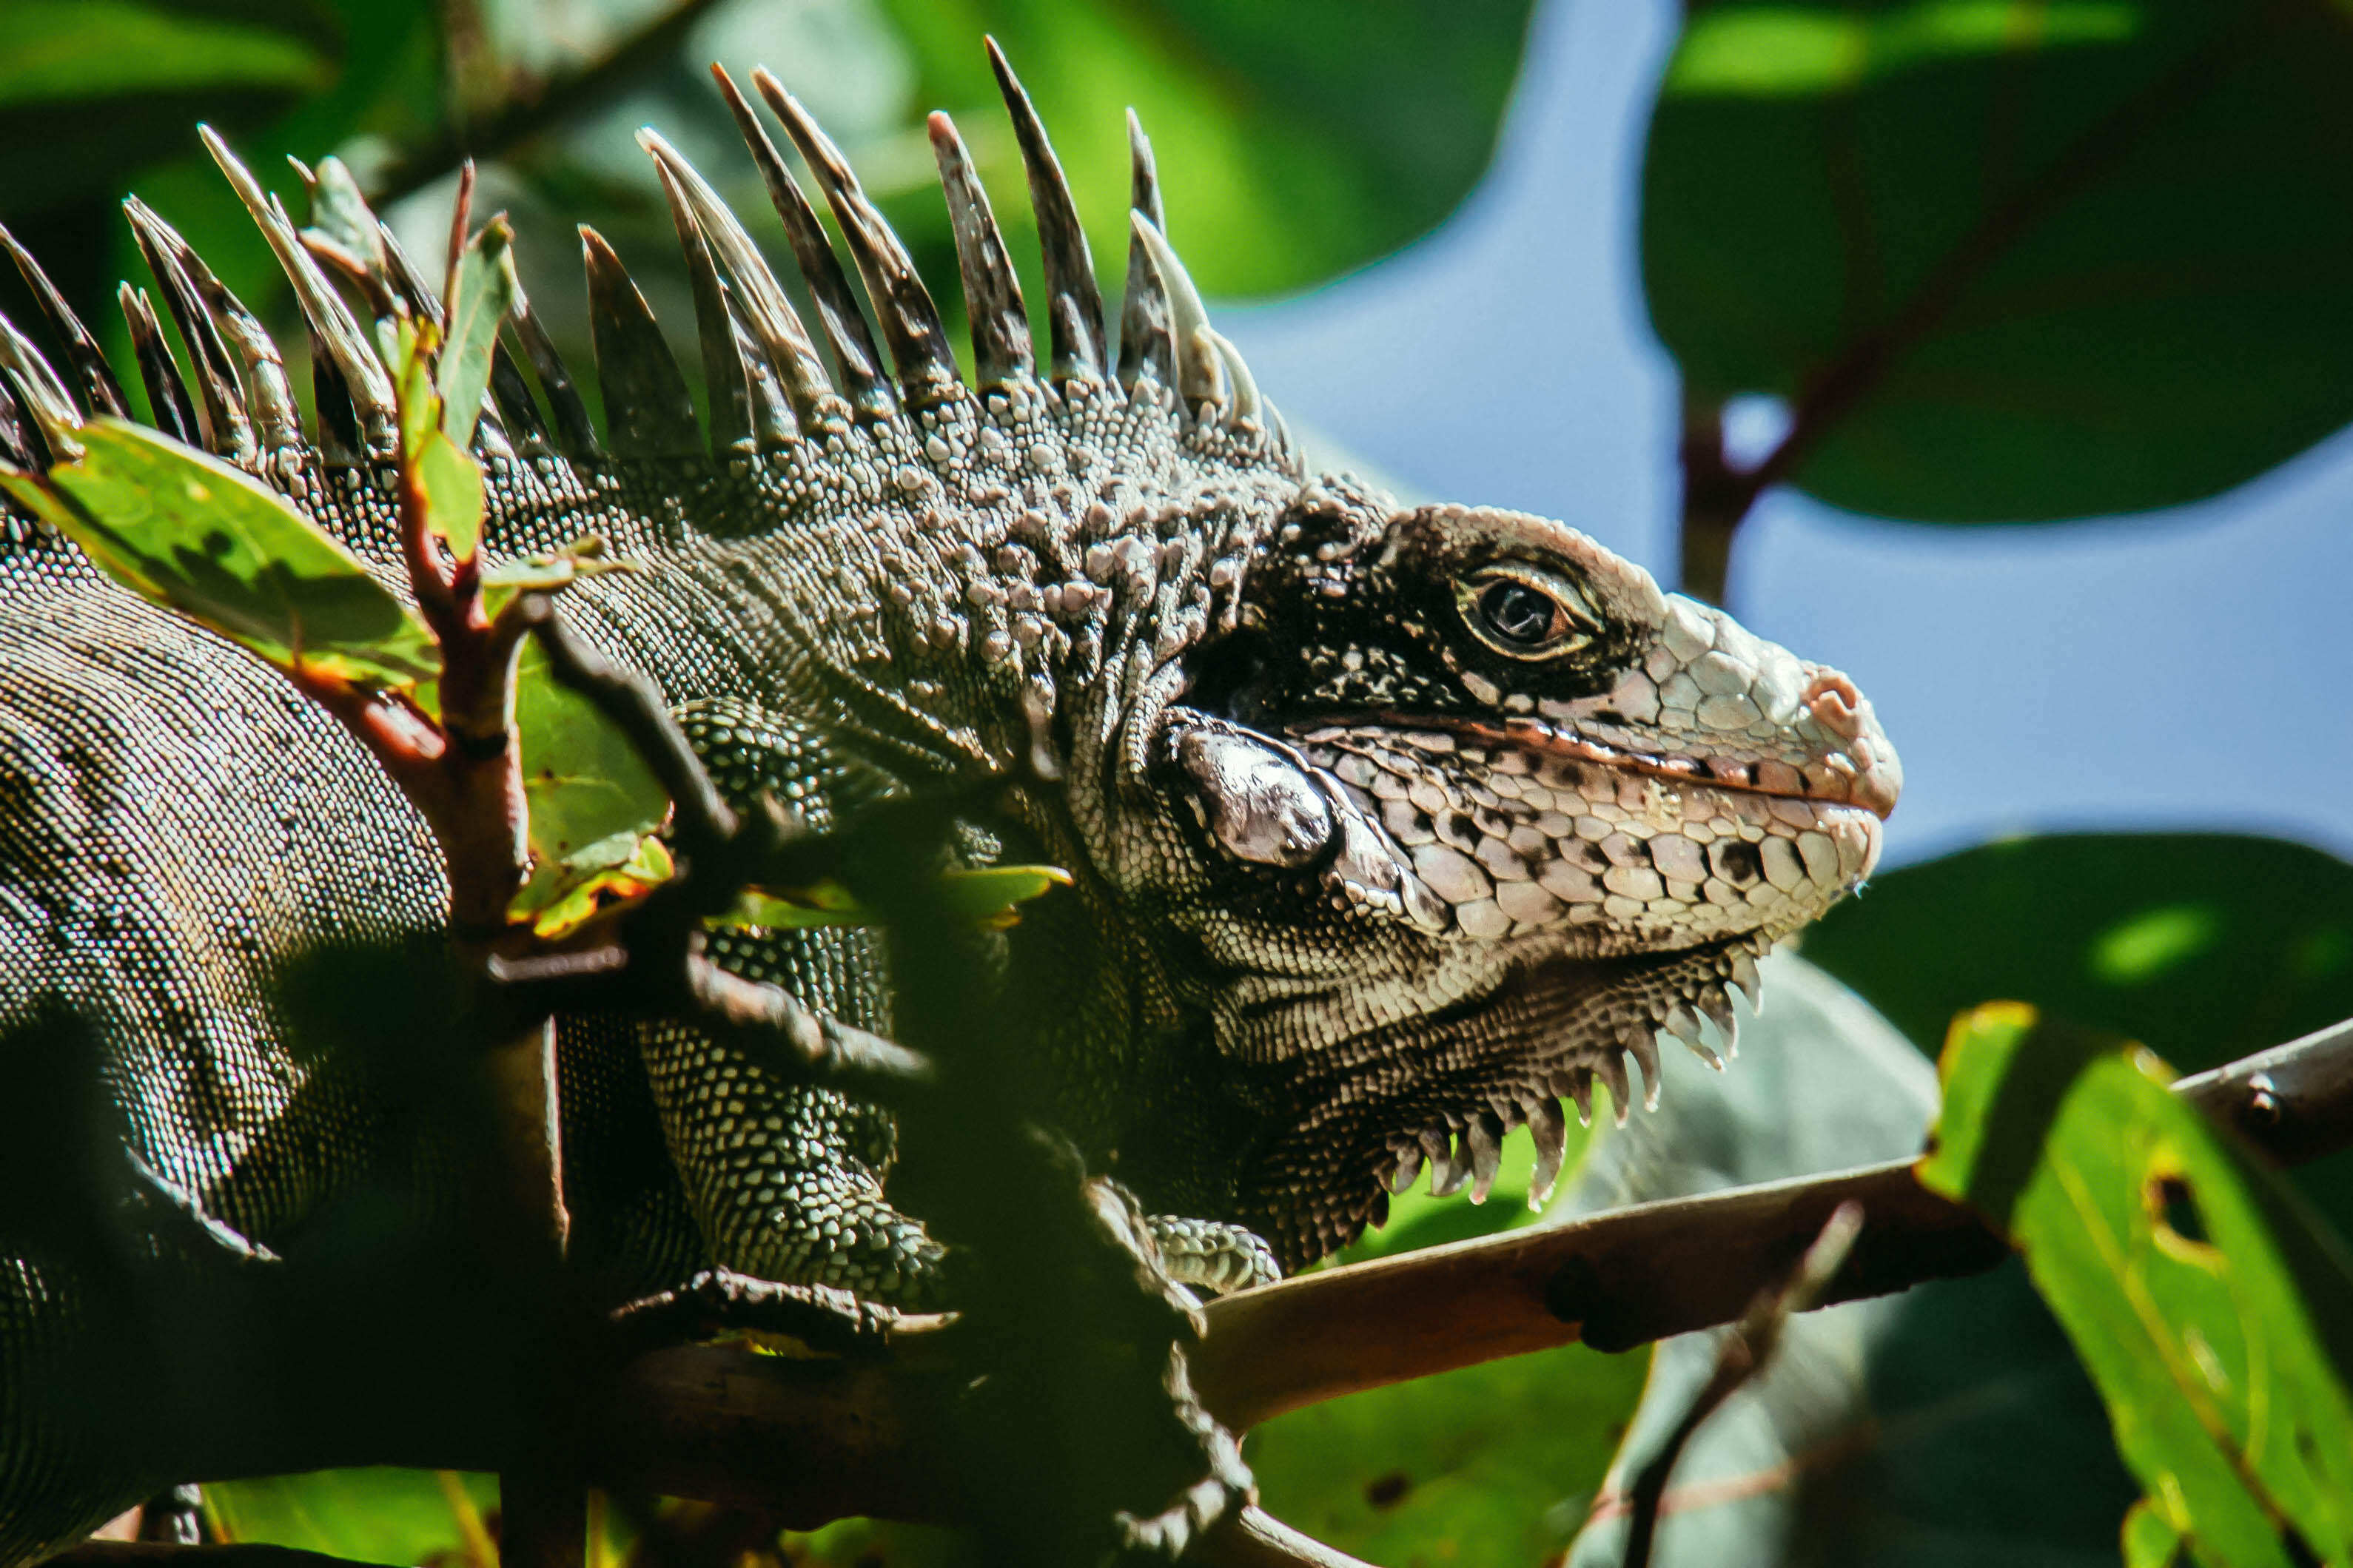 (Virgin Islands) Wild iguana